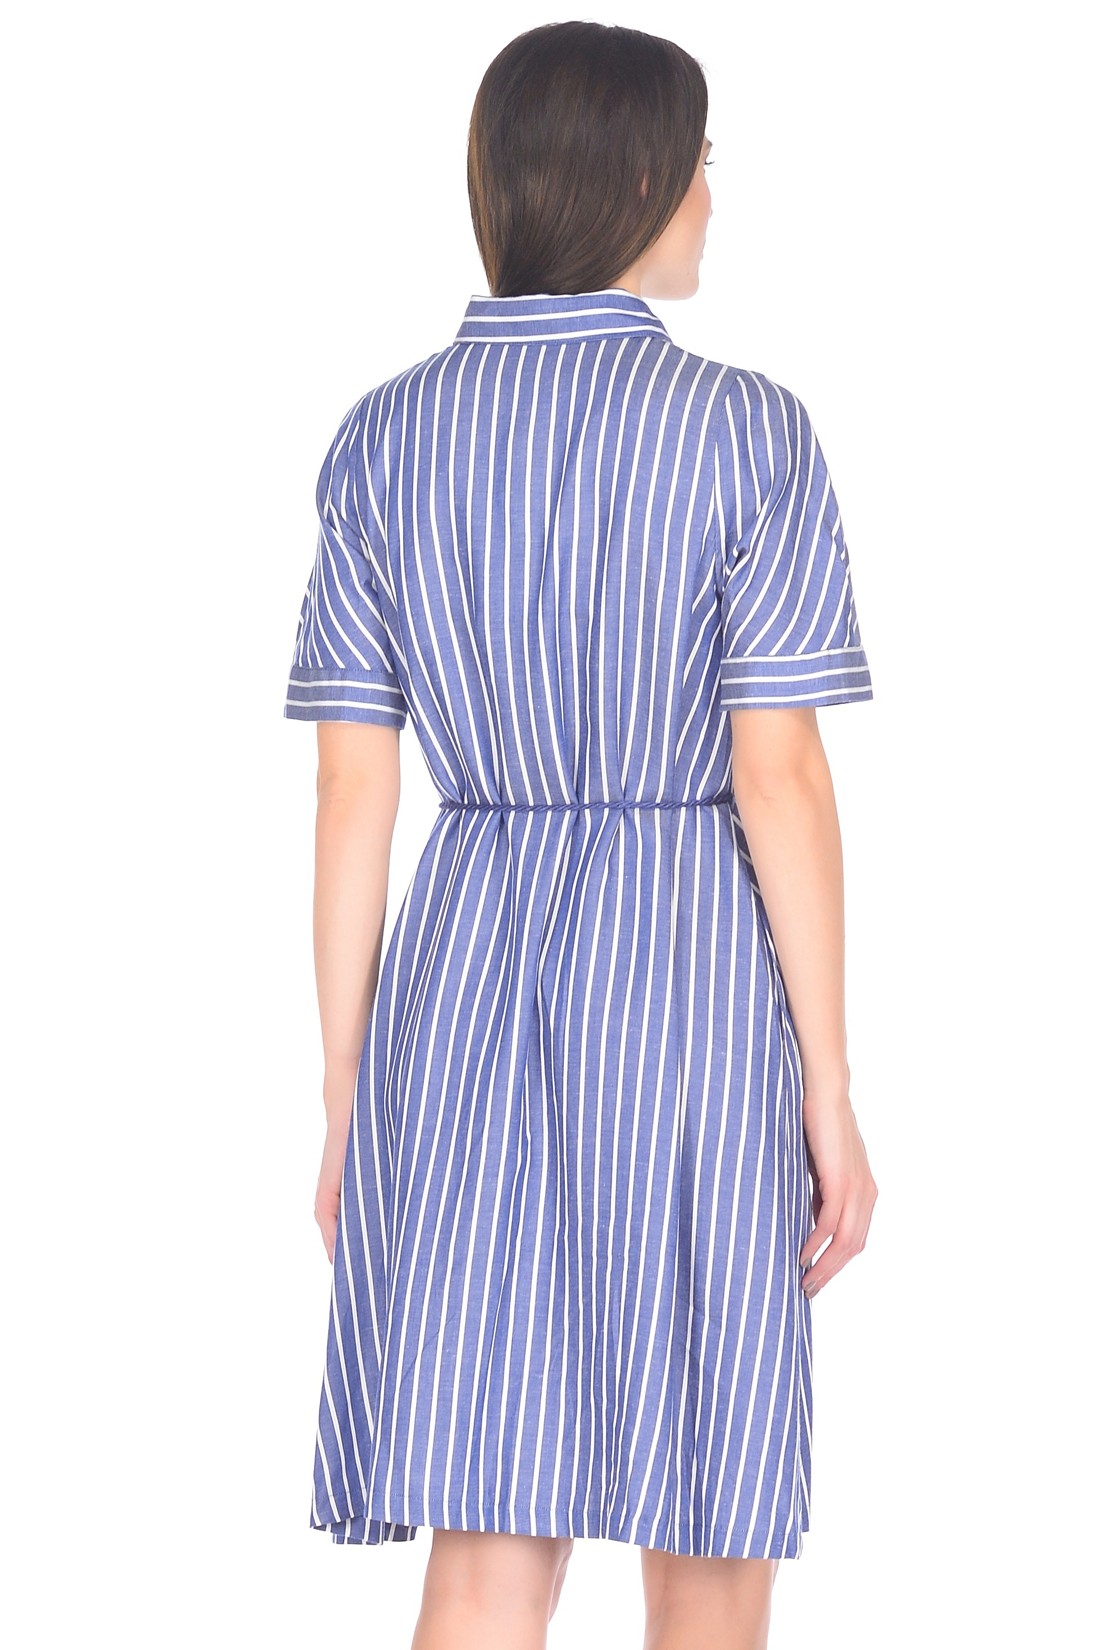 Платье-рубашка со льном (арт. baon B458029), размер S, цвет dark navy striped#синий Платье-рубашка со льном (арт. baon B458029) - фото 2